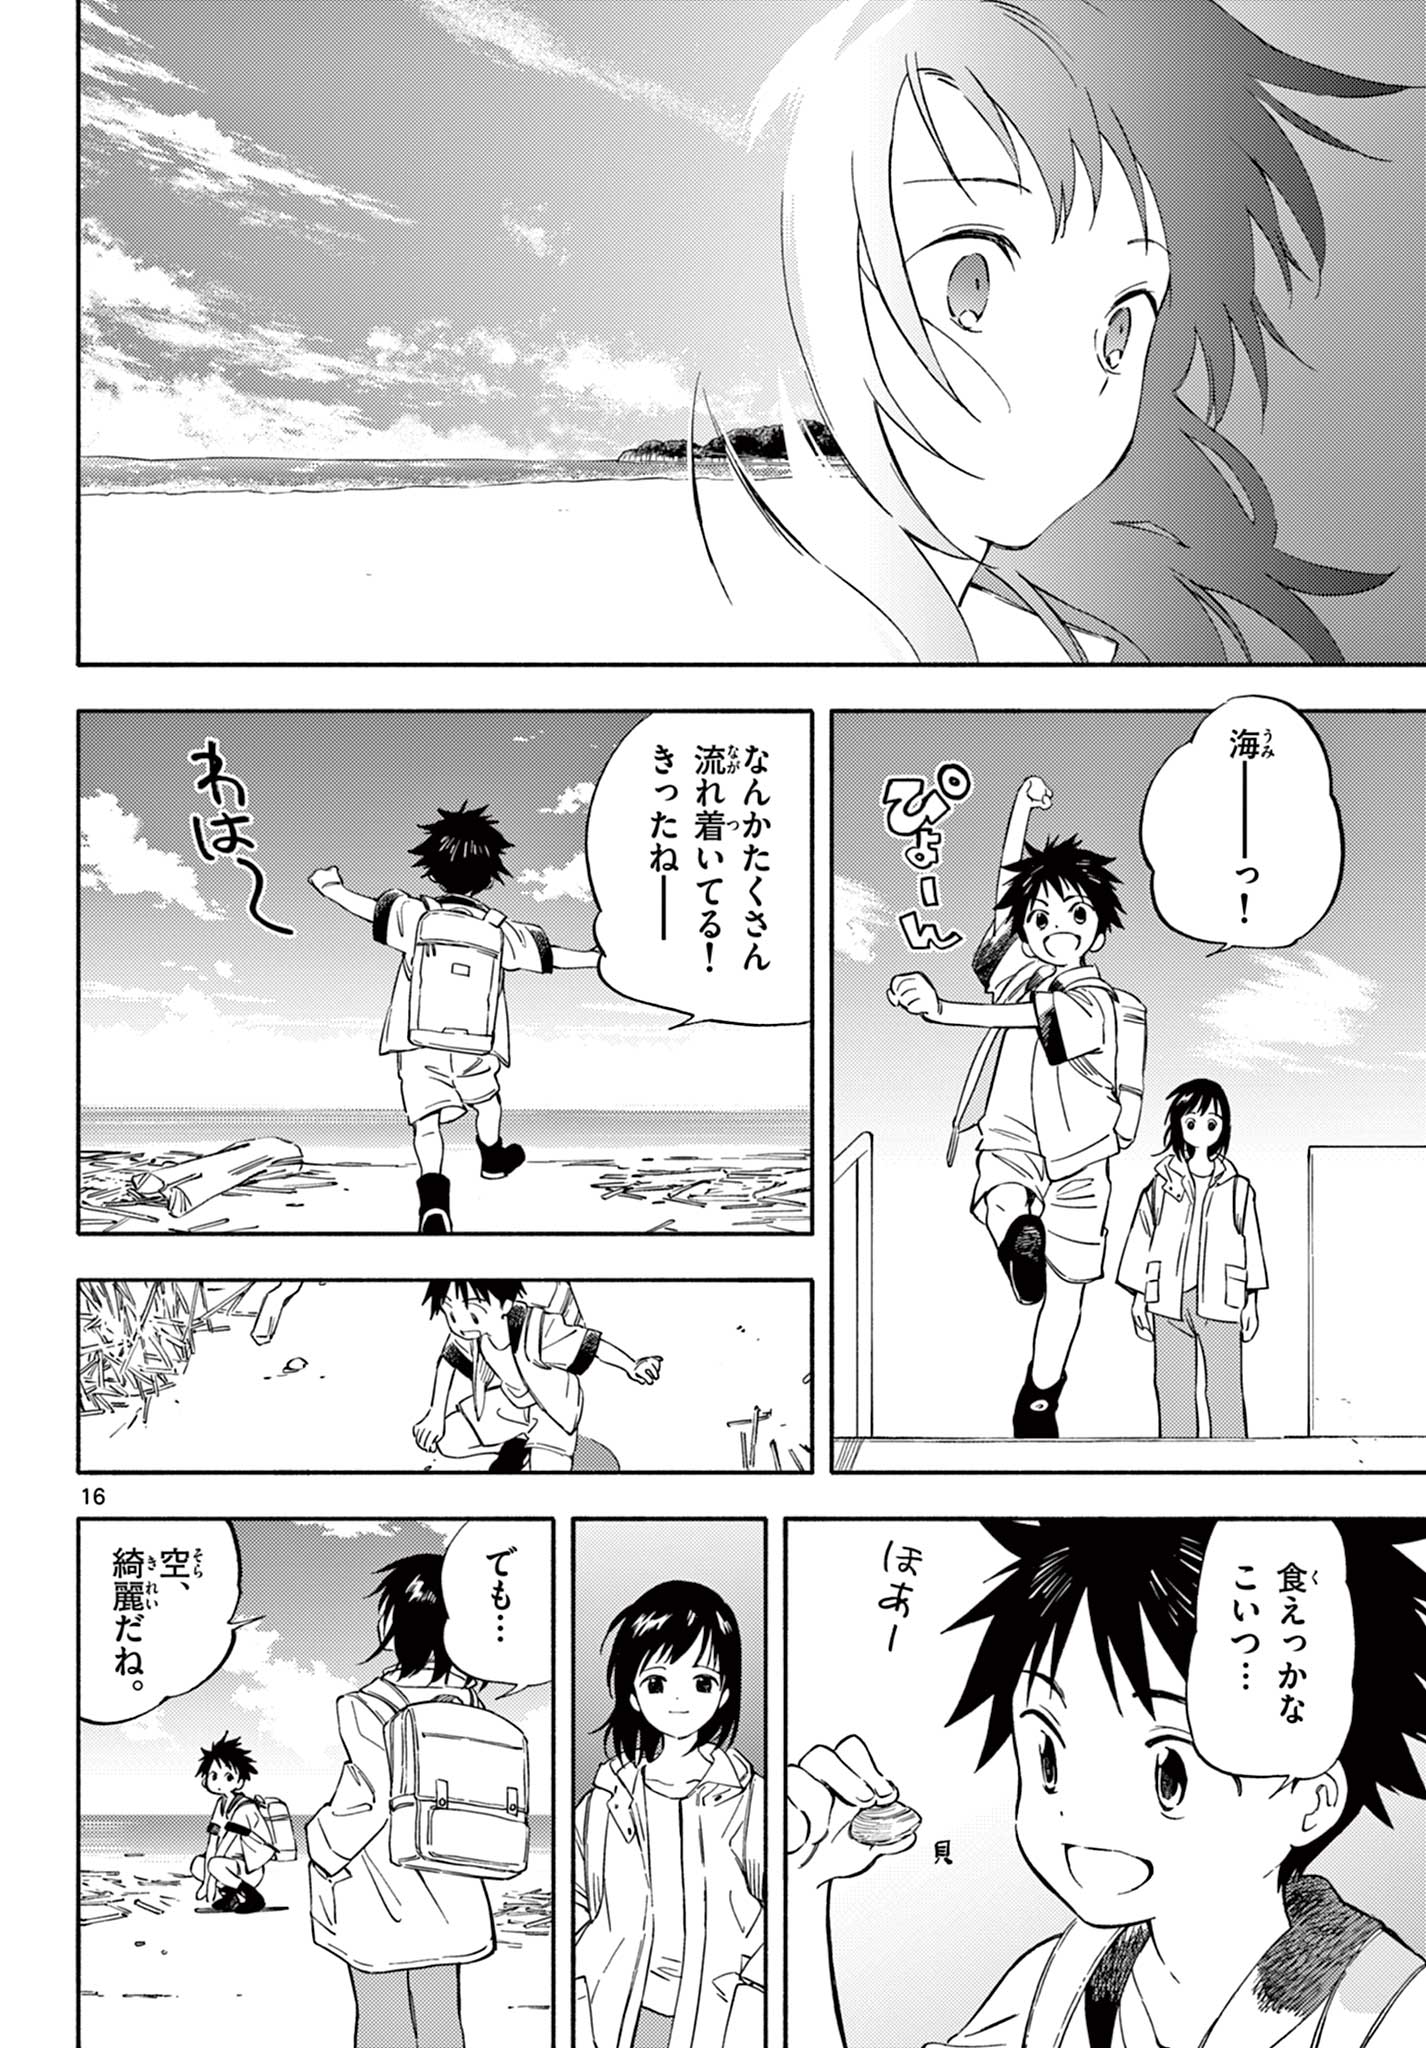 Nami no Shijima no Horizont - Chapter 14.2 - Page 4